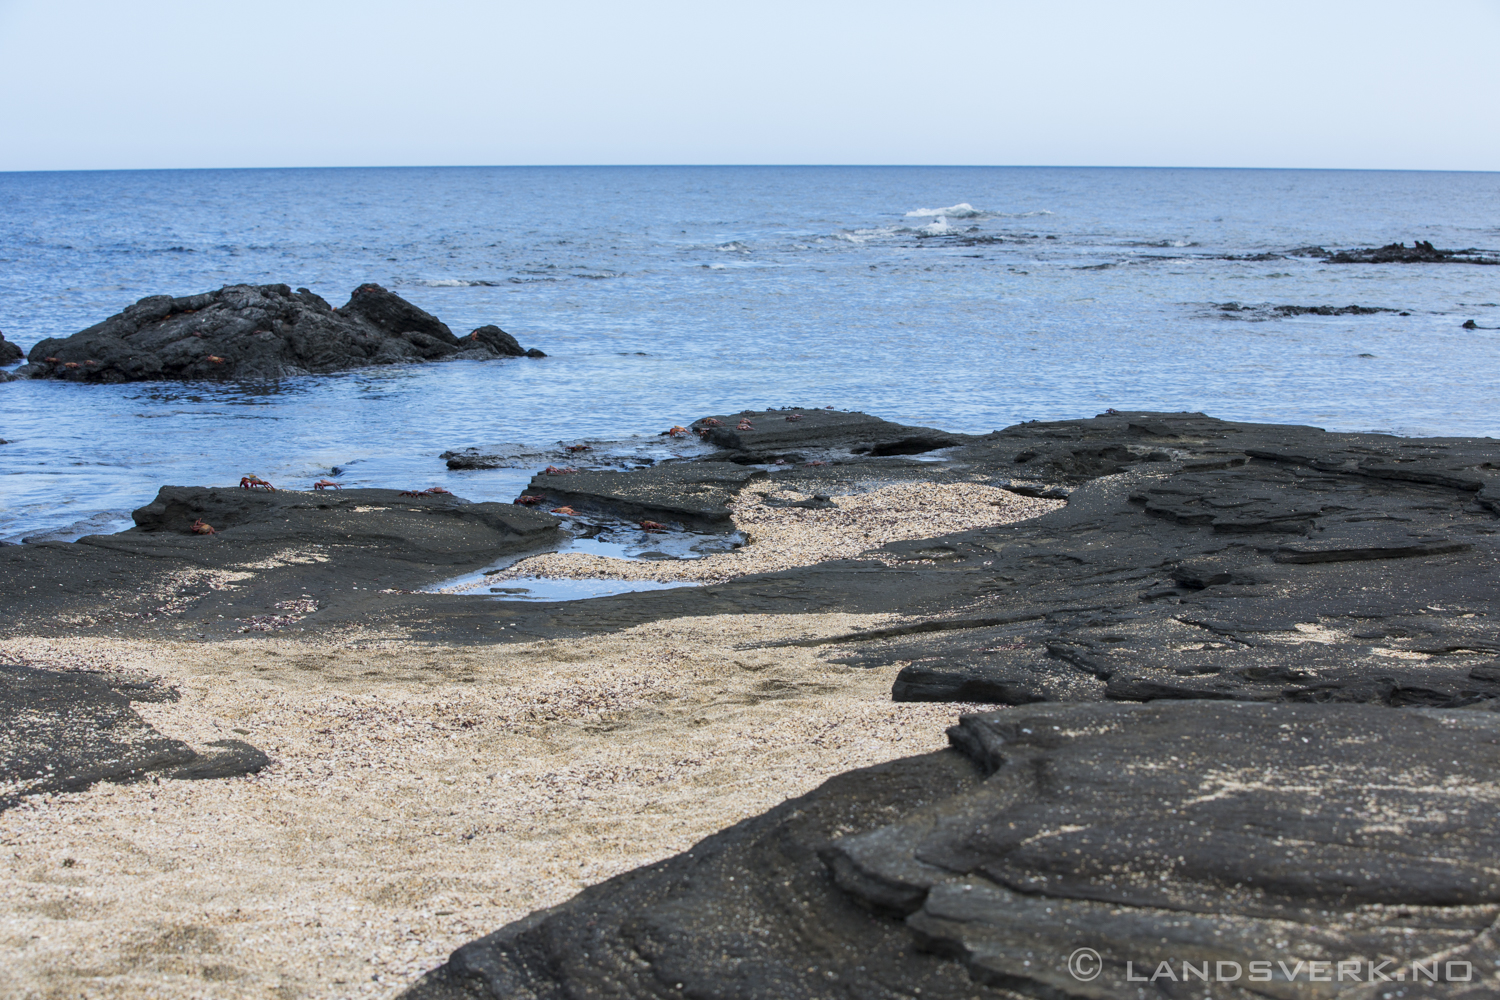 Puerto Egas, Puerto Egas, Isla Santiago, Galapagos. 

(Canon EOS 5D Mark III / Canon EF 70-200mm f/2.8 L IS II USM)